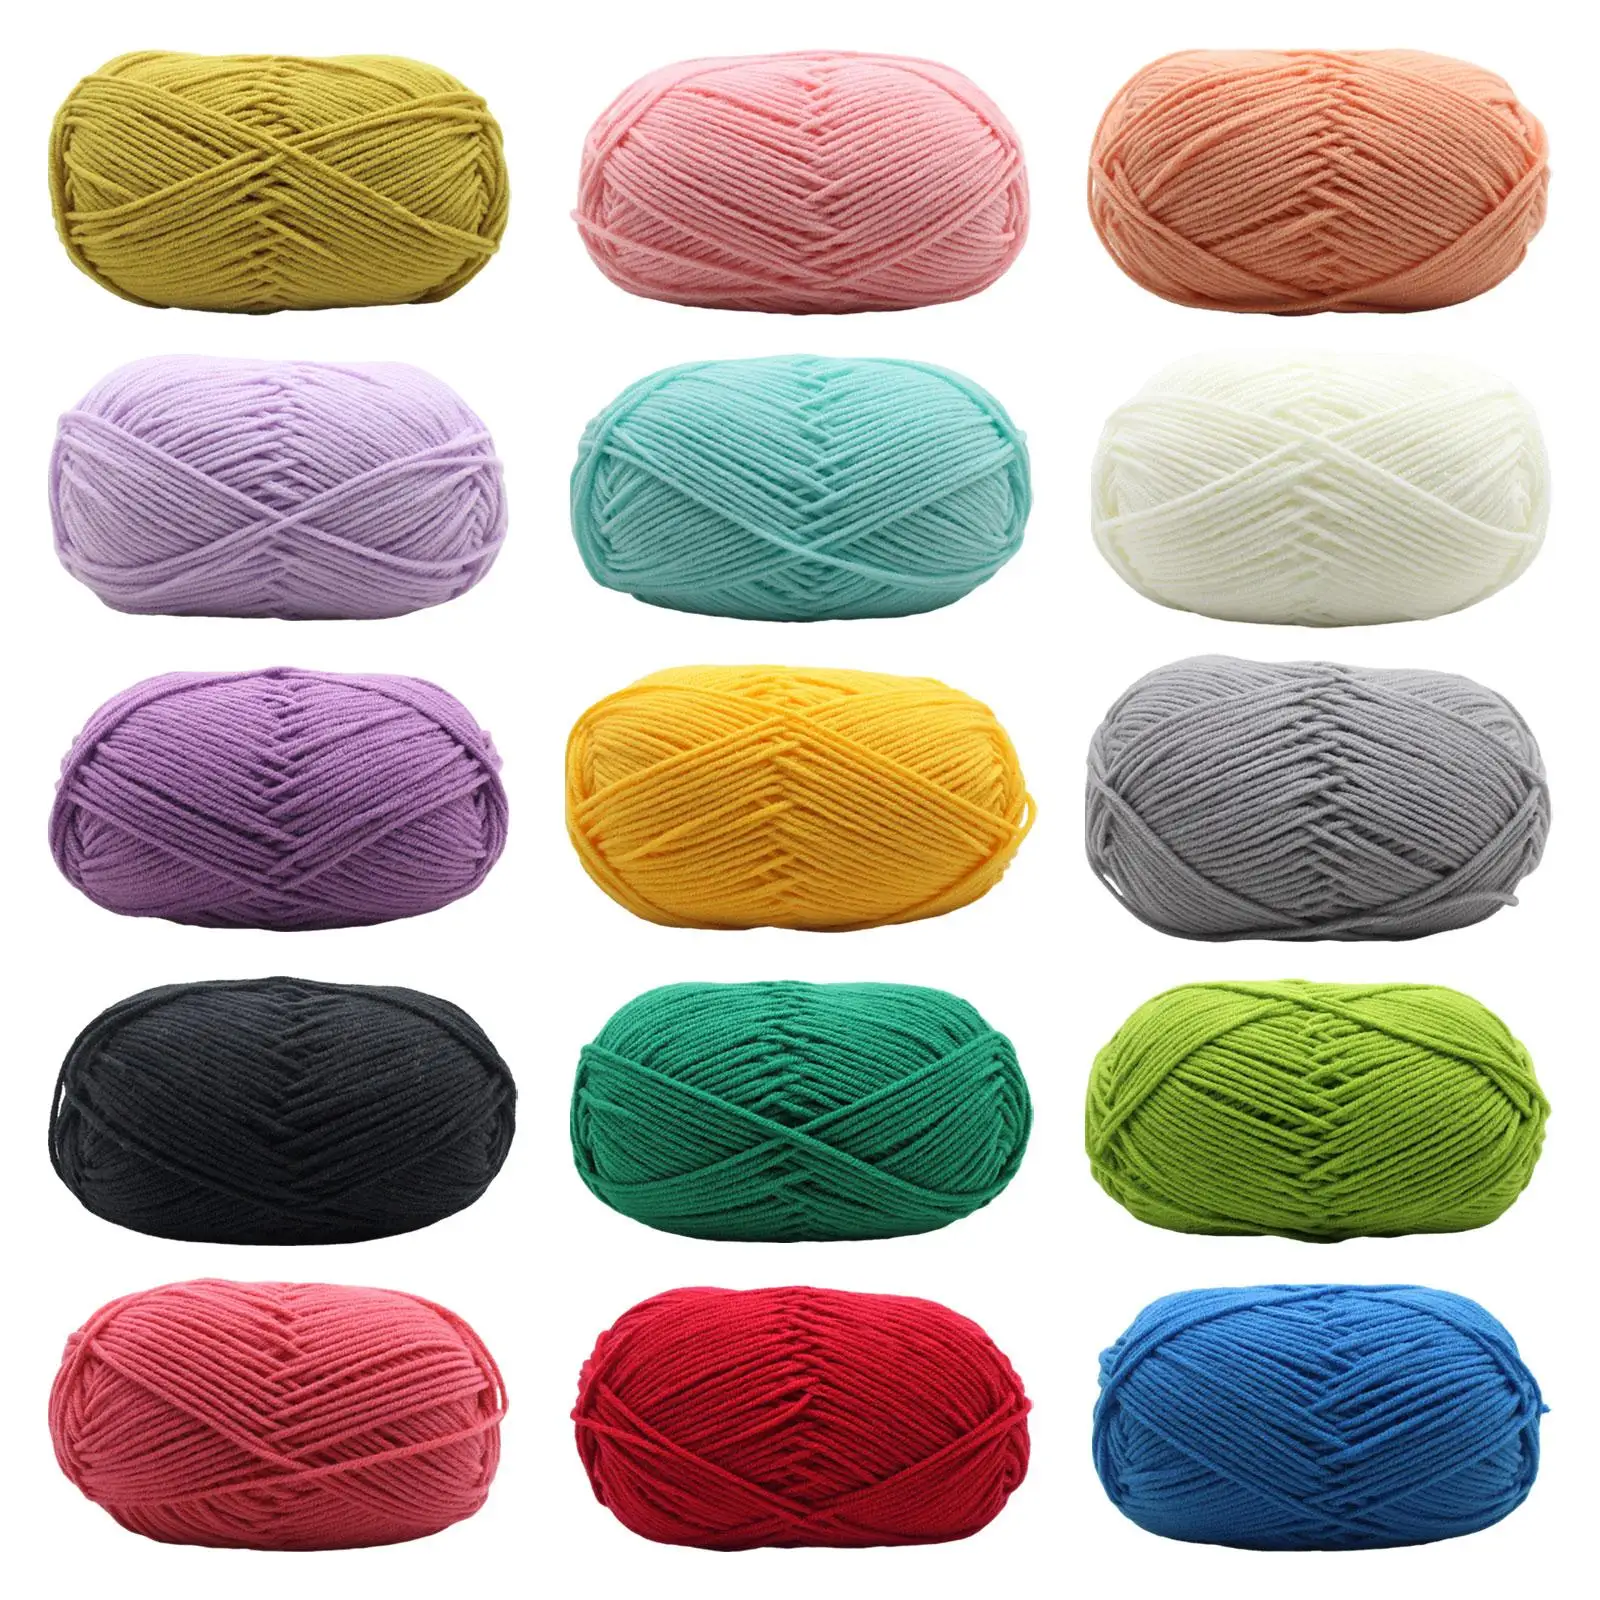 Hand Knitting Crochet Line Knitting Thread Supplies Crochet Thread for Adults